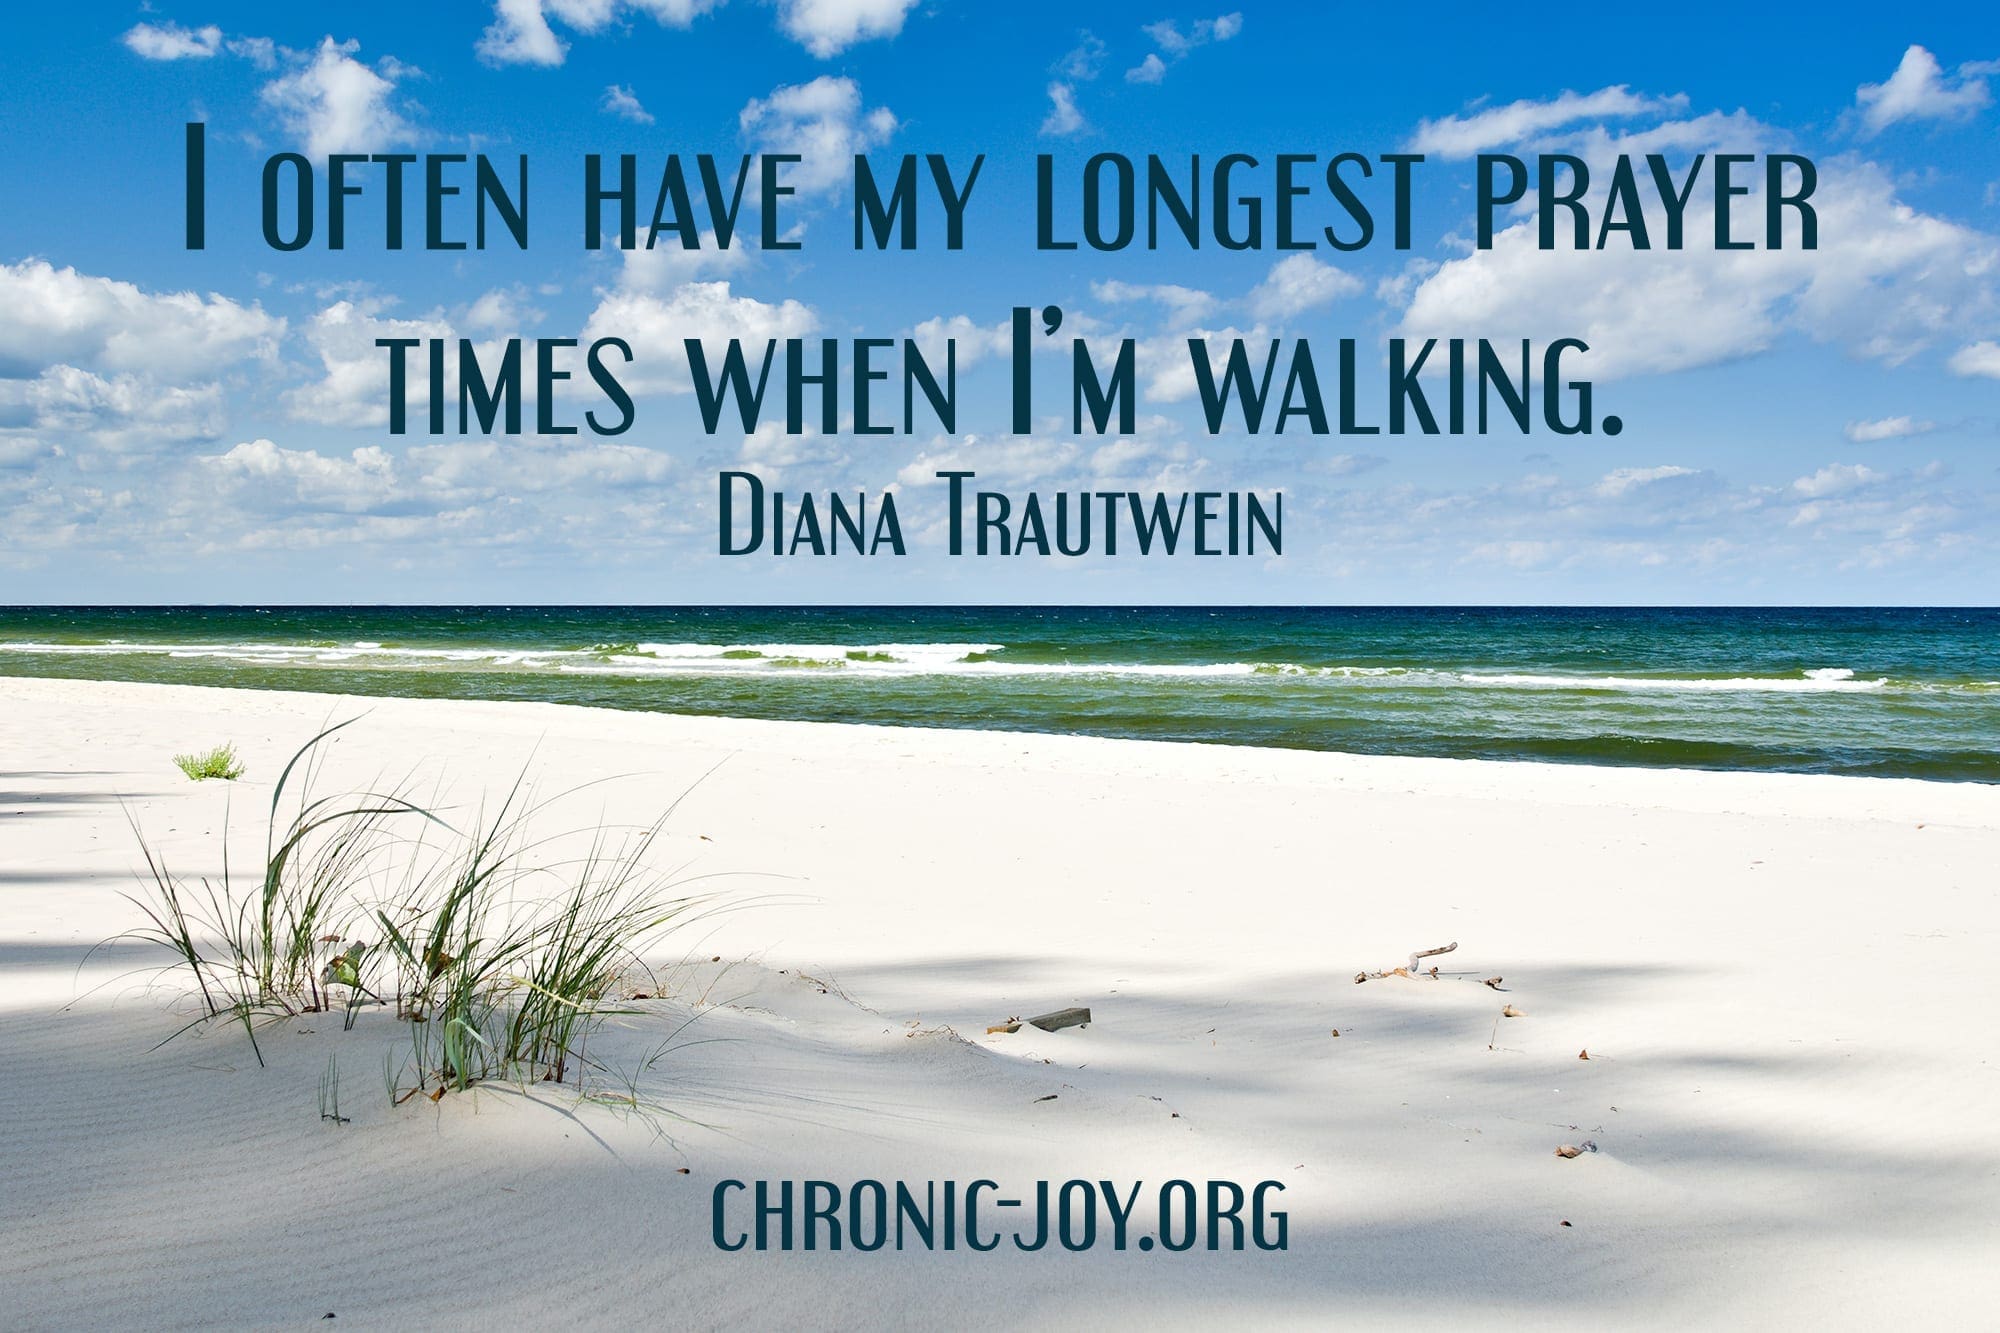 "I often have my longest prayer times when I’m walking." Diana Trautwein